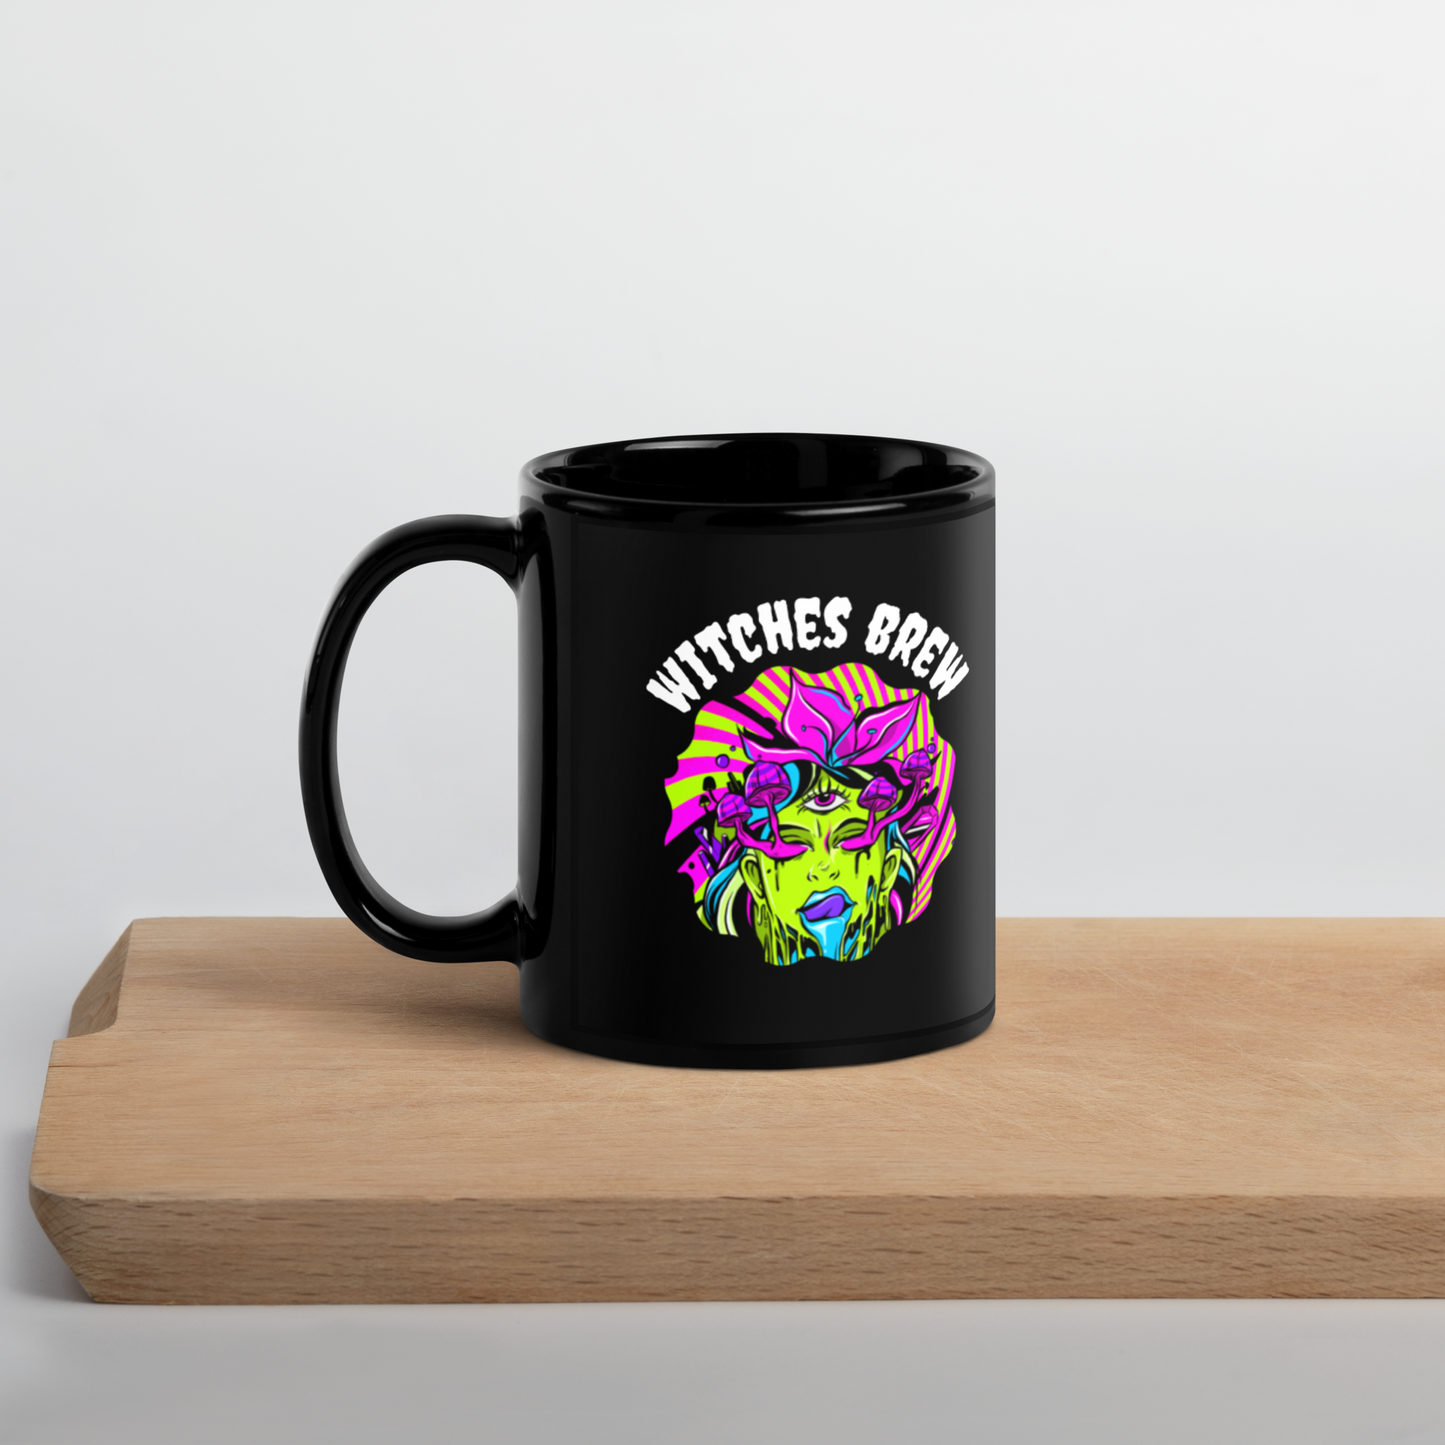 Witches brew mug